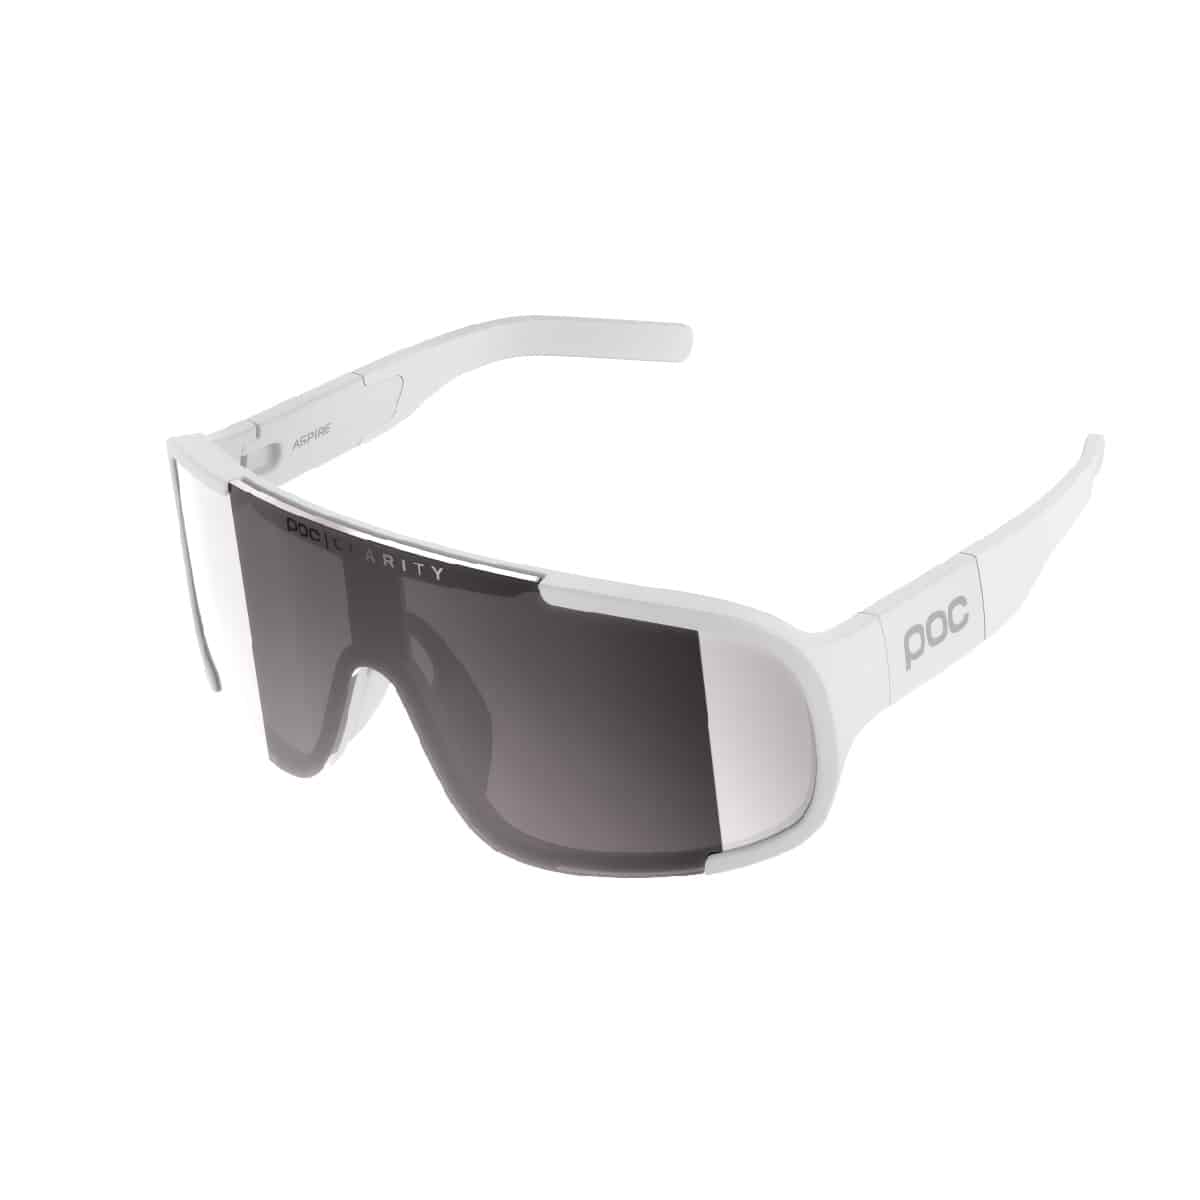 Poc Aspire Sunglasses Hydrogen White angle